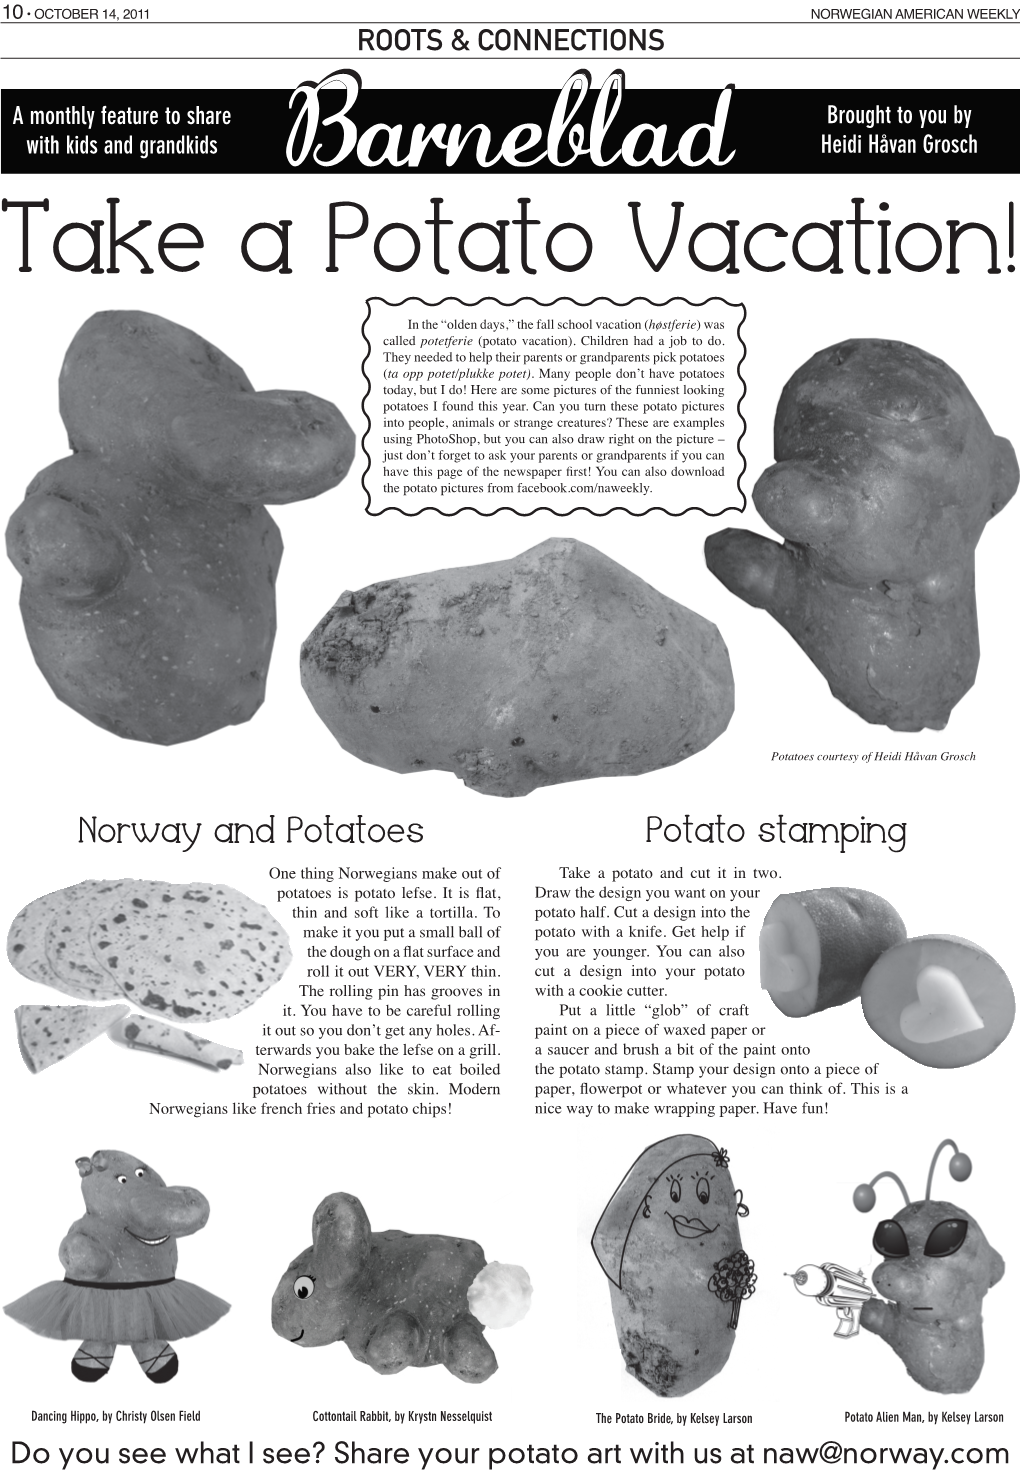 Potato Stamping Norway and Potatoes